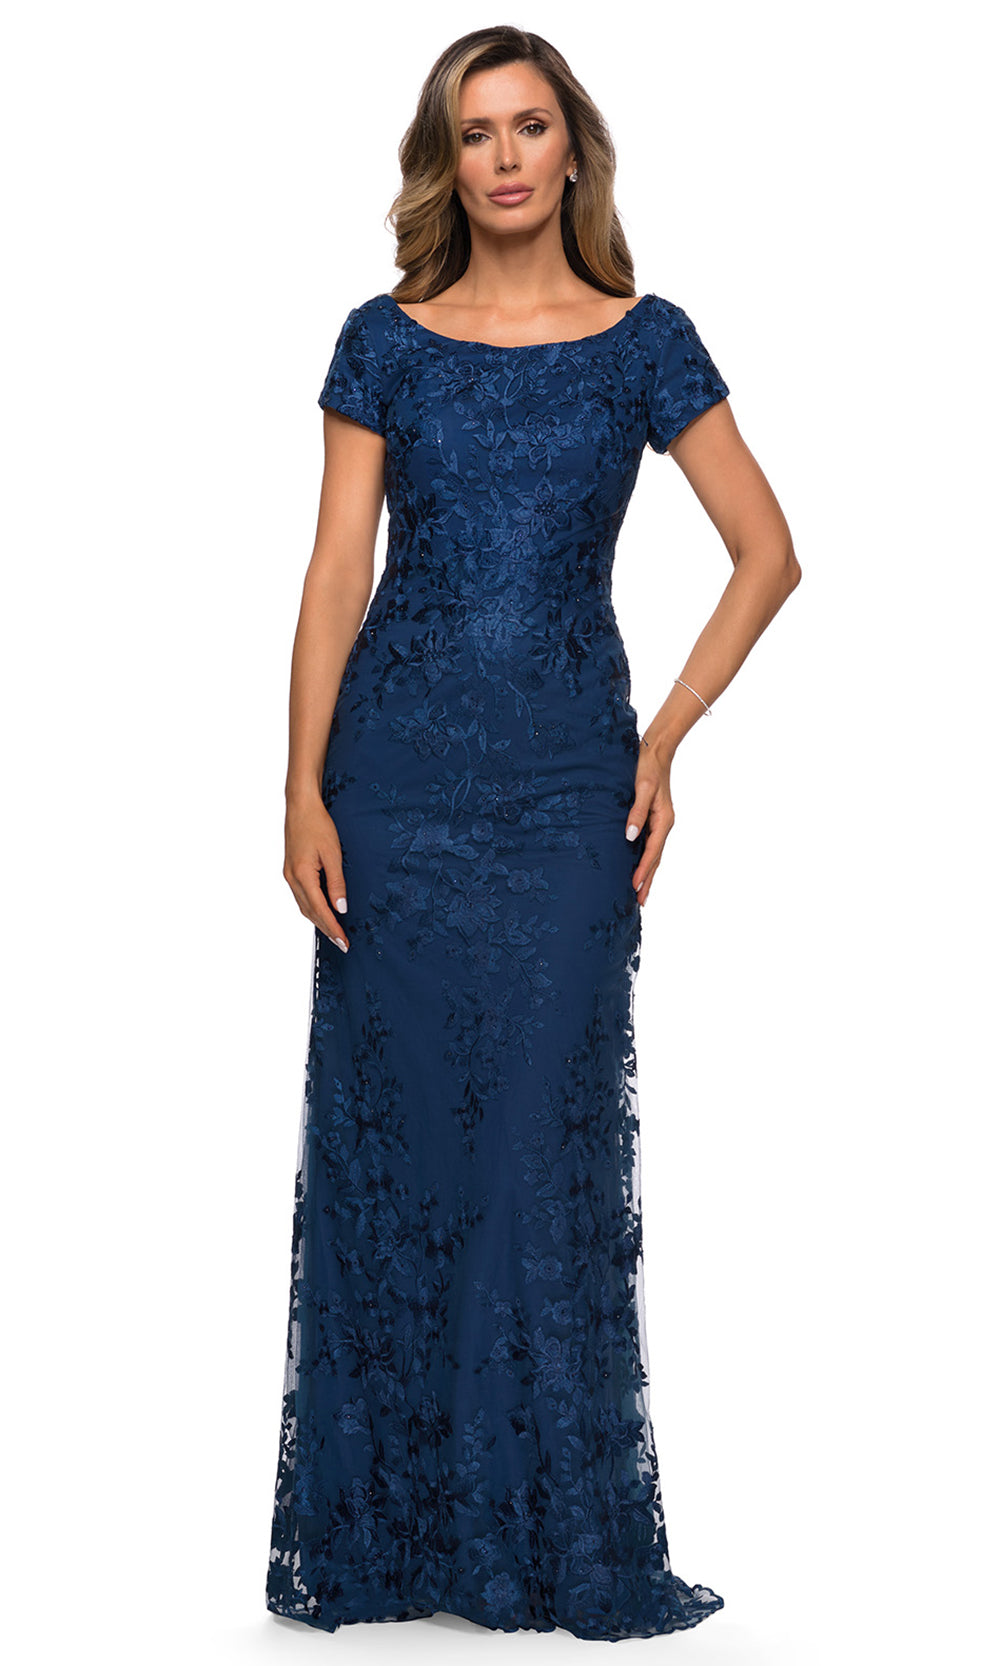 La Femme - 27842 Scoop Neck Lace Fitted Dress In Blue